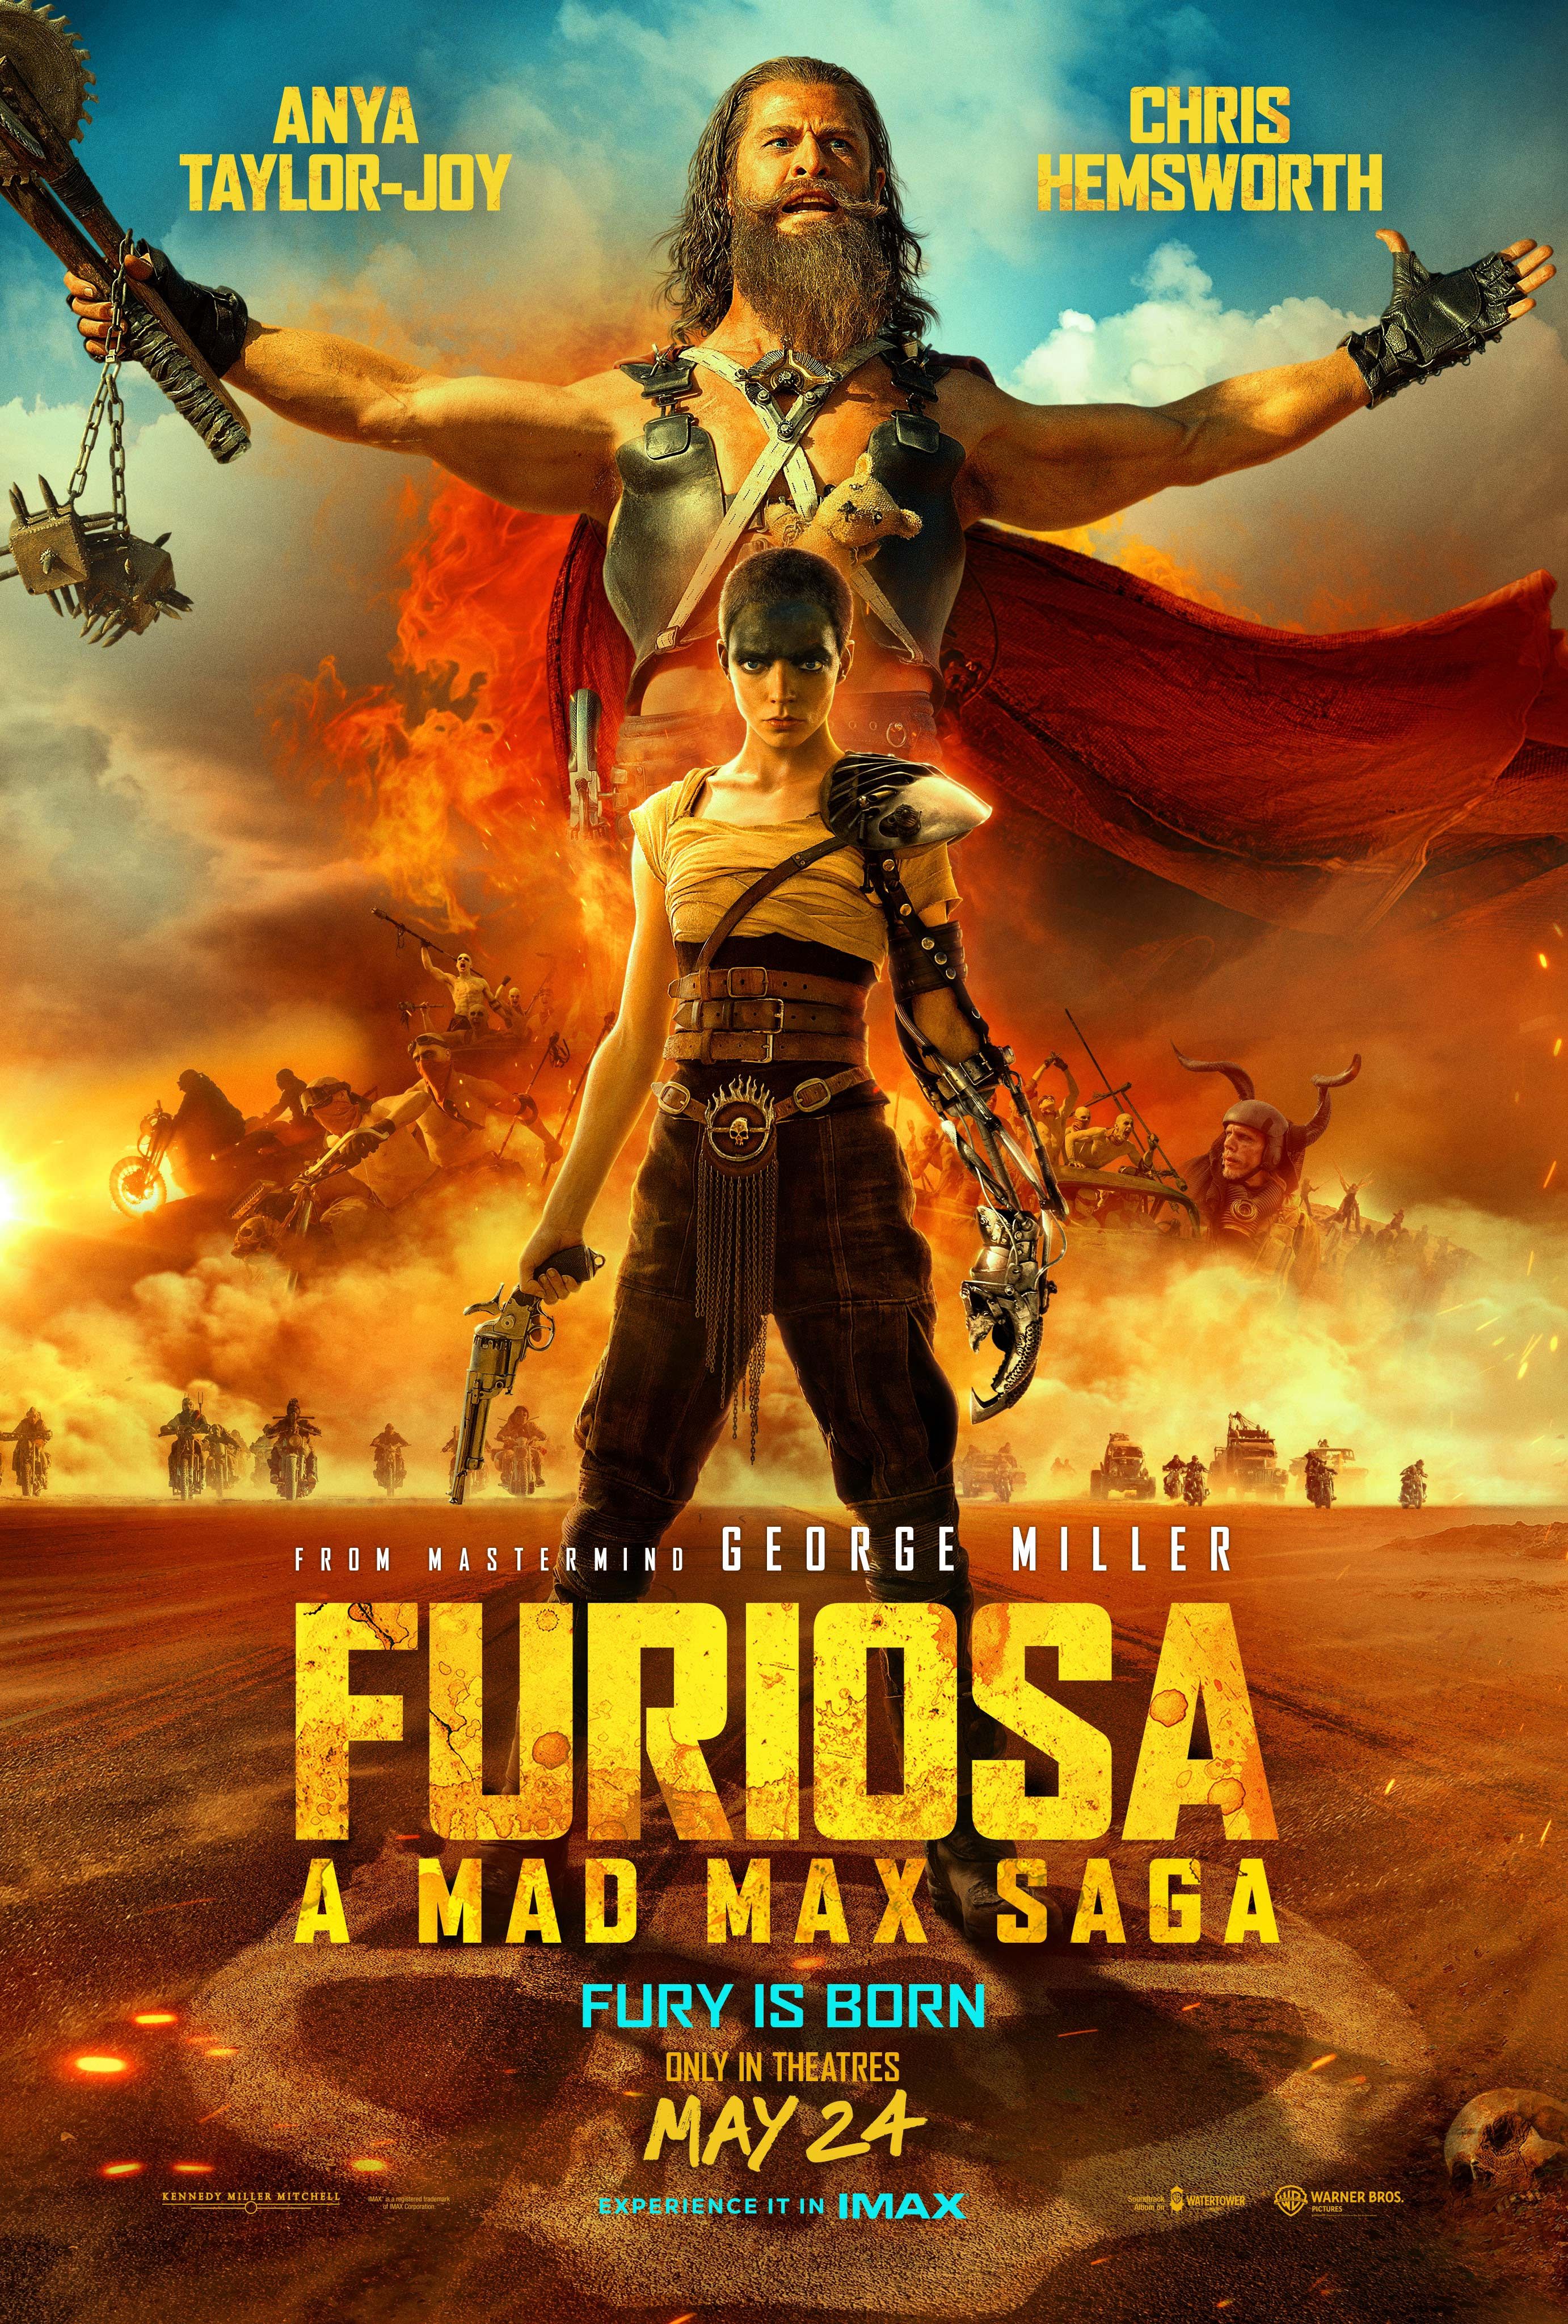 Furiosa A Mad Max Saga Poster Showing Anya Taylor Joy as Furiosa and Chris Hemsworth Standing in Front of a Motorcycle Gang